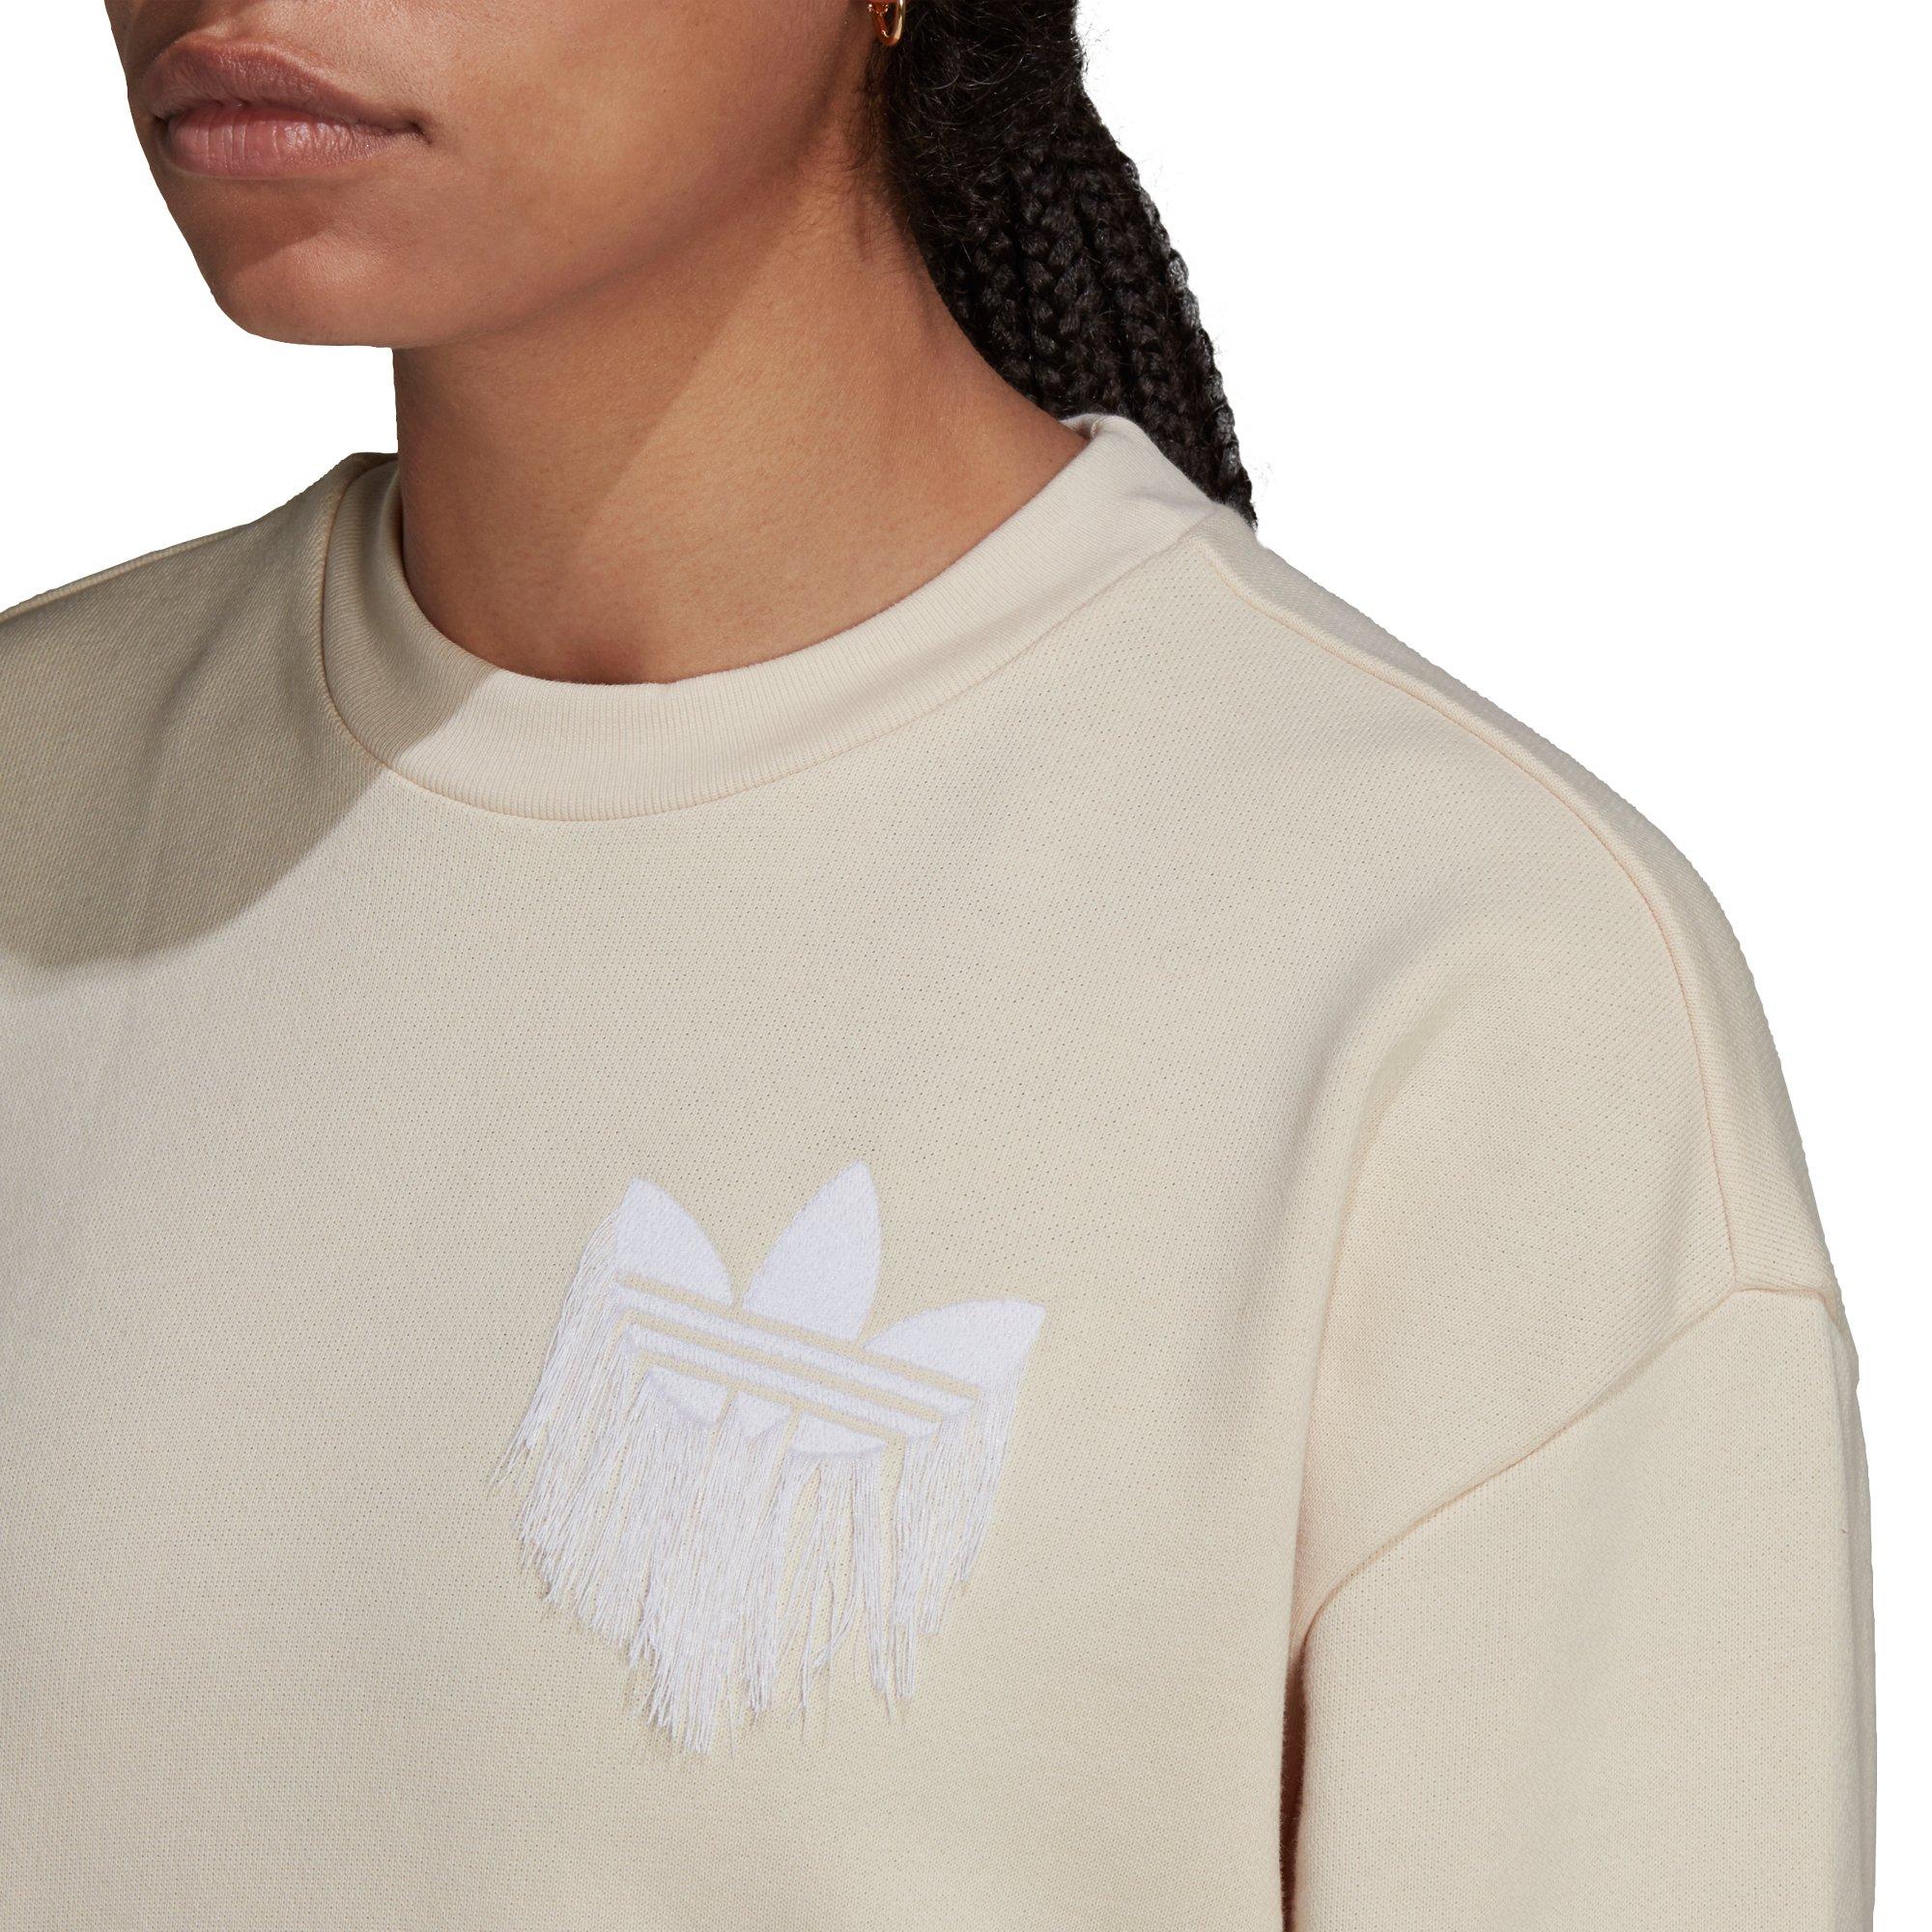 Originals Women's Cream Sweatshirt with Trefoil Fringe Embroidery